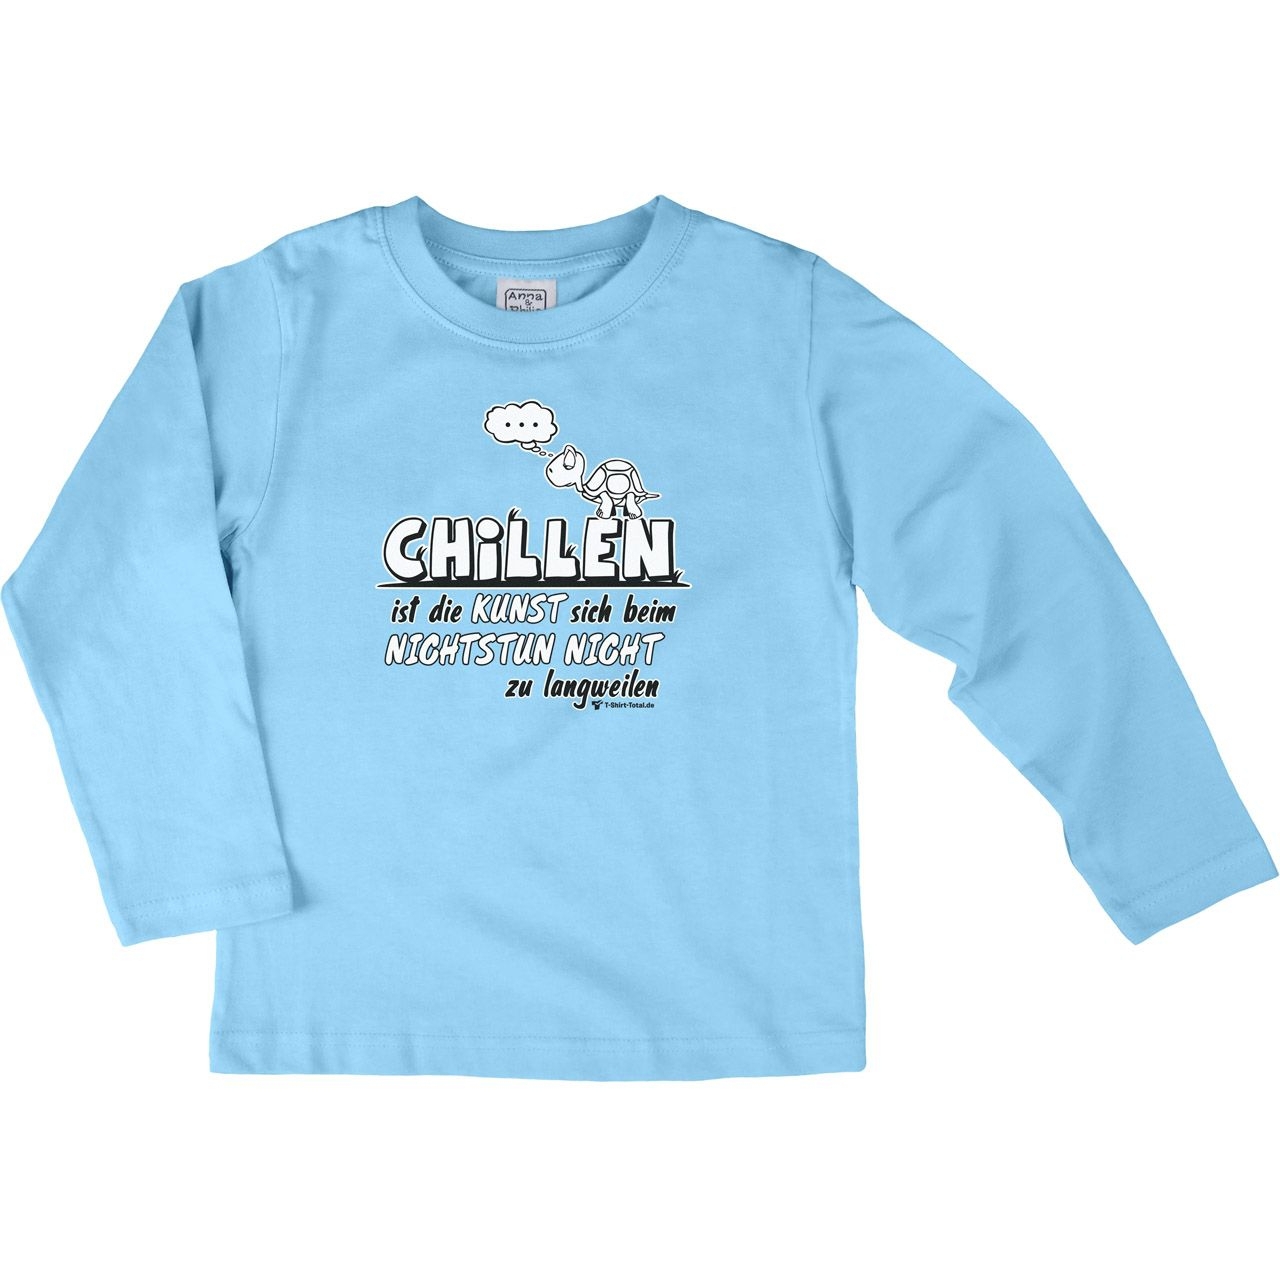 Chillen Kinder Langarm Shirt hellblau 134 / 140